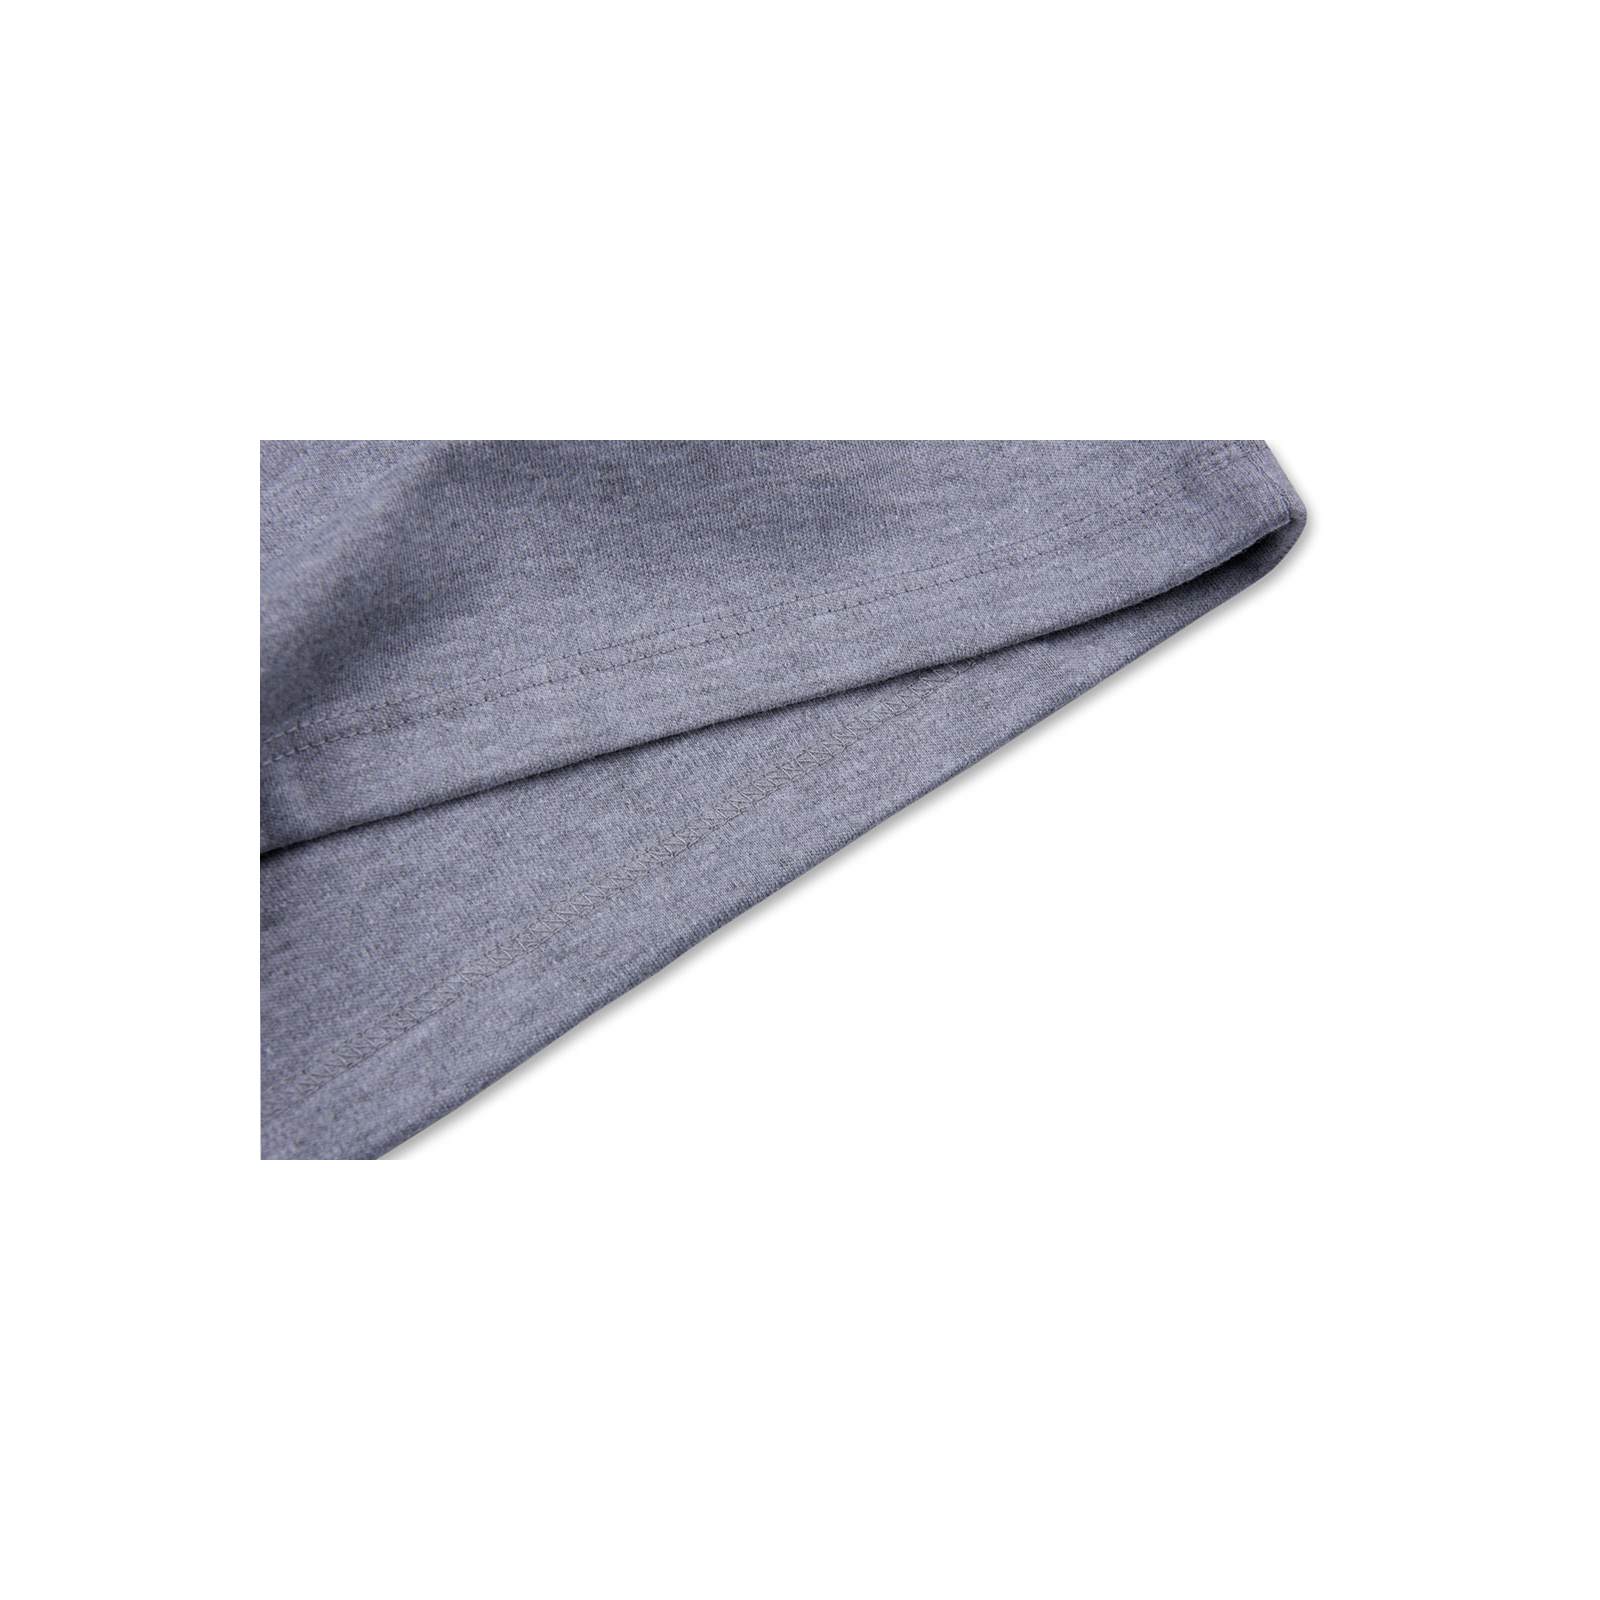 Кофта Lovetti водолазка серая меланжевая (1011-98-gray) изображение 5